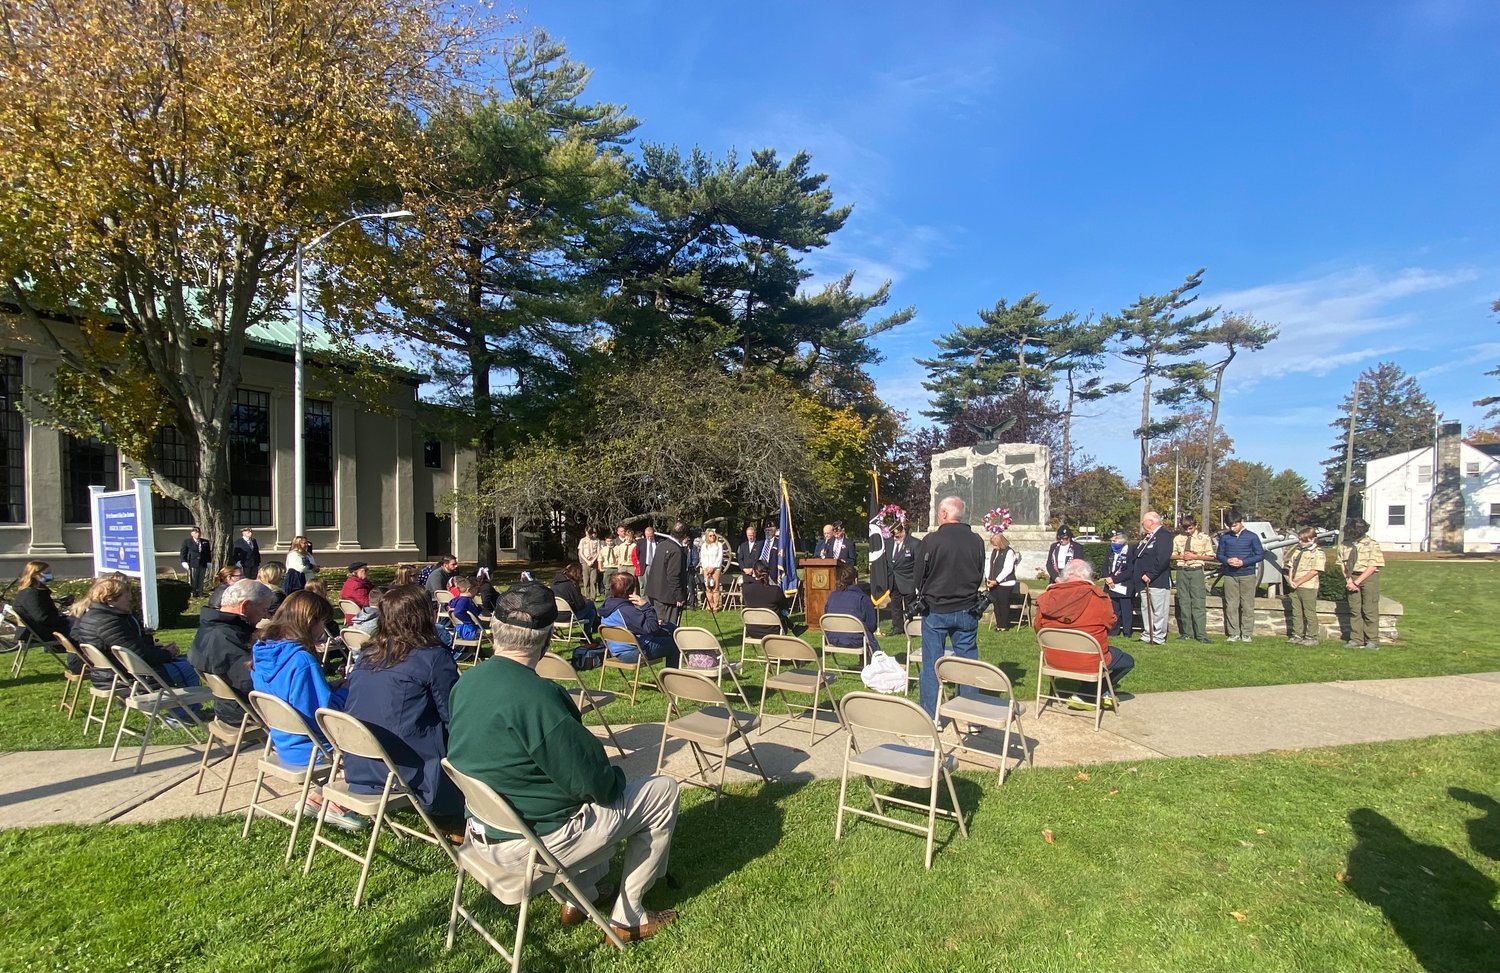 The group gathered at Islip Veterans Memorial Park.